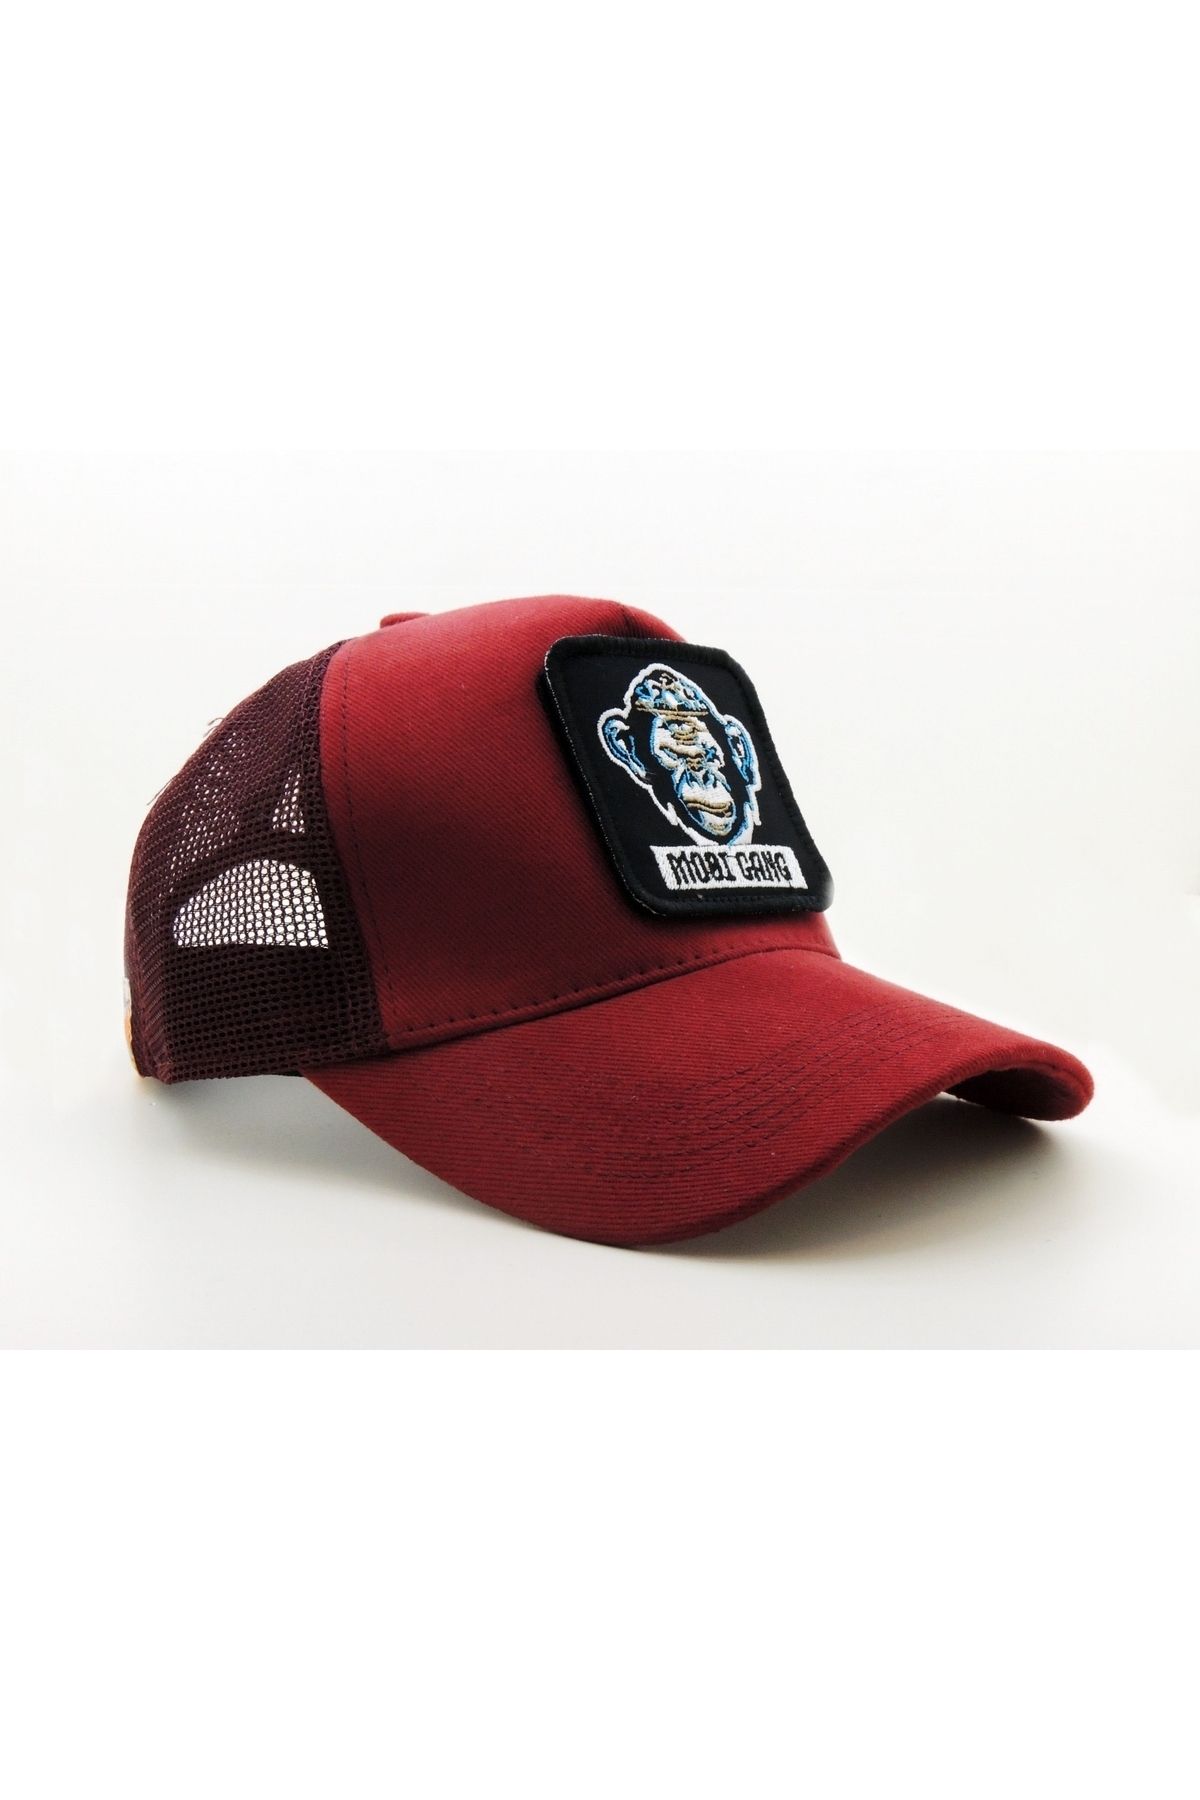 CityGoat Trucker (NAKIŞ) Mobi Gang Logolu Unisex Bordo Şapka (CAP)